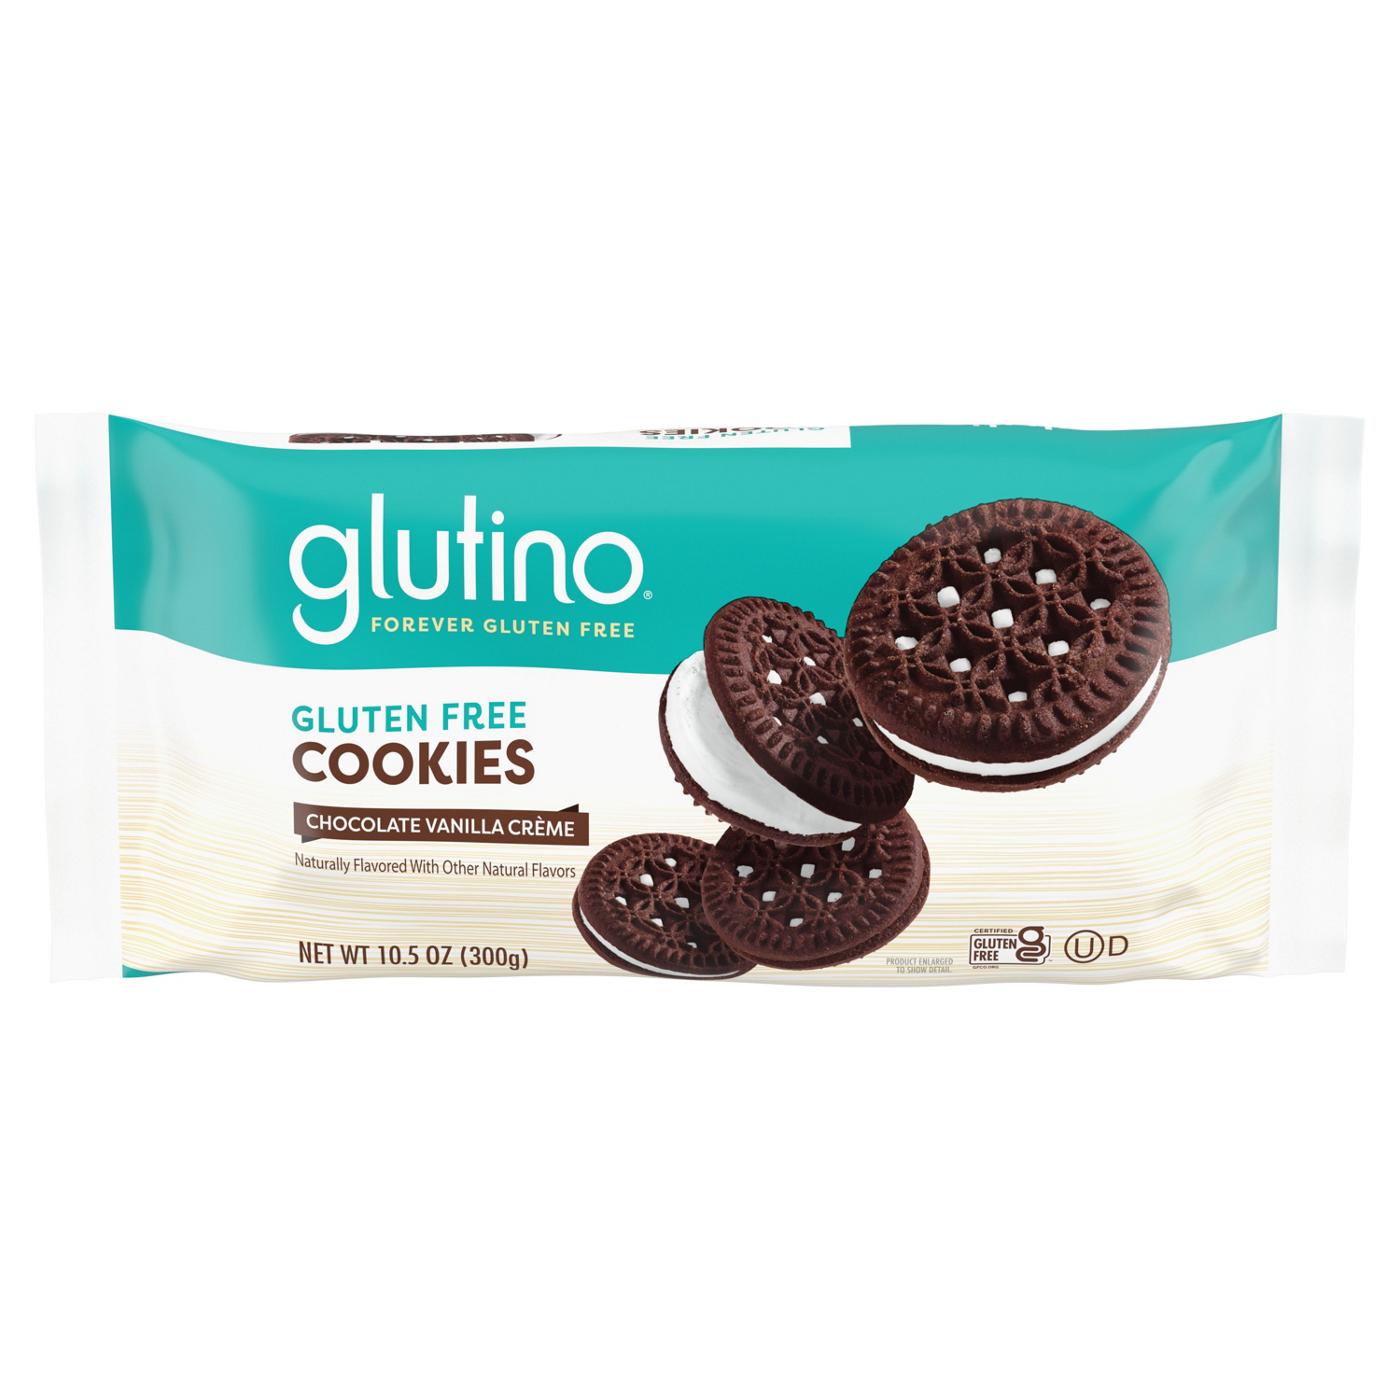 Glutino Gluten Free Chocolate Vanilla Creme Cookies; image 1 of 4